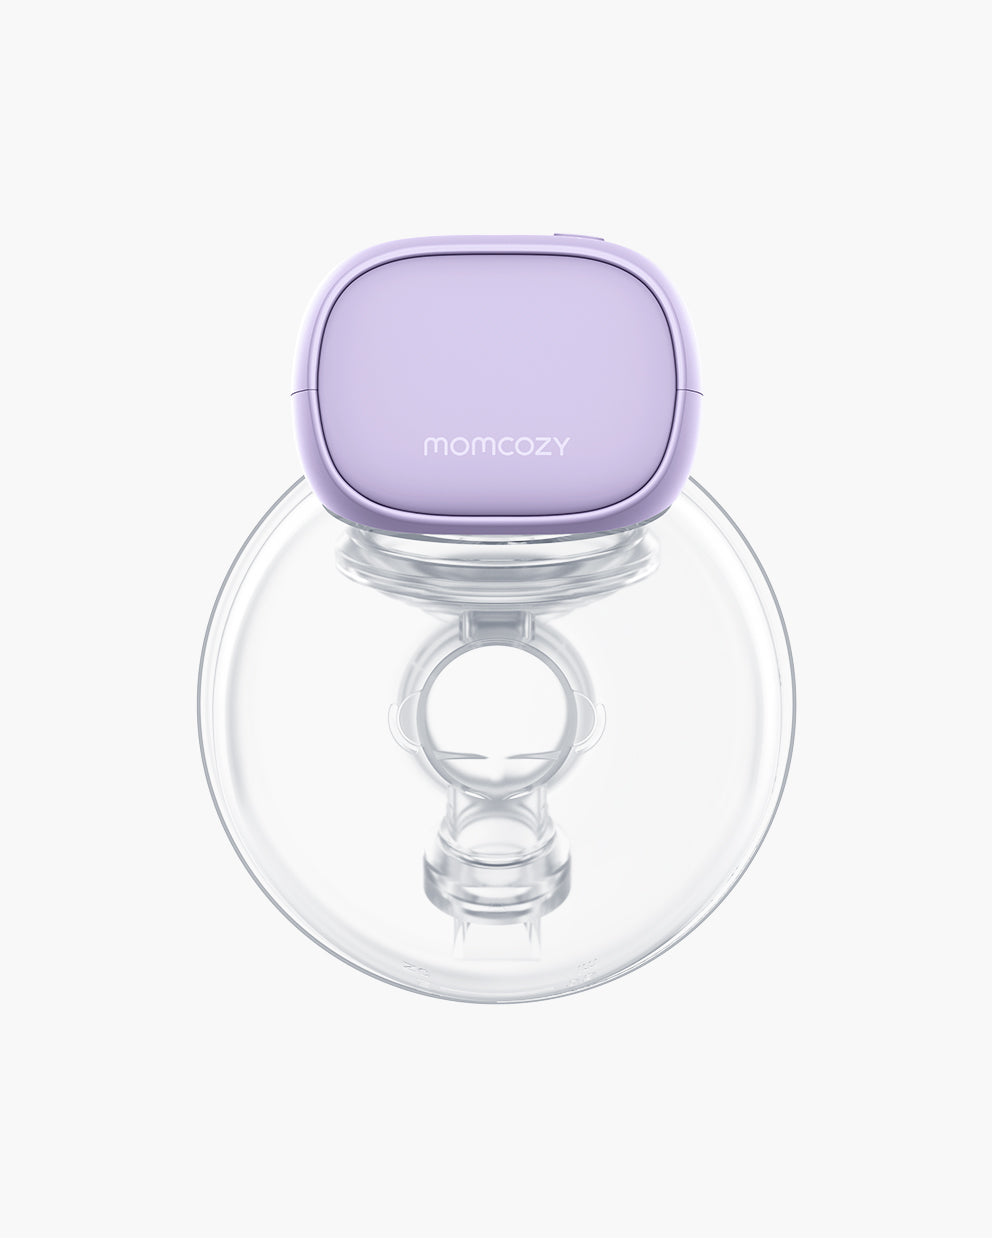 Momcozy S9 Pro Wearable Breast Pump Hands Free, Mom Cozy Electric Portable  Breast Pump 24mm Purple